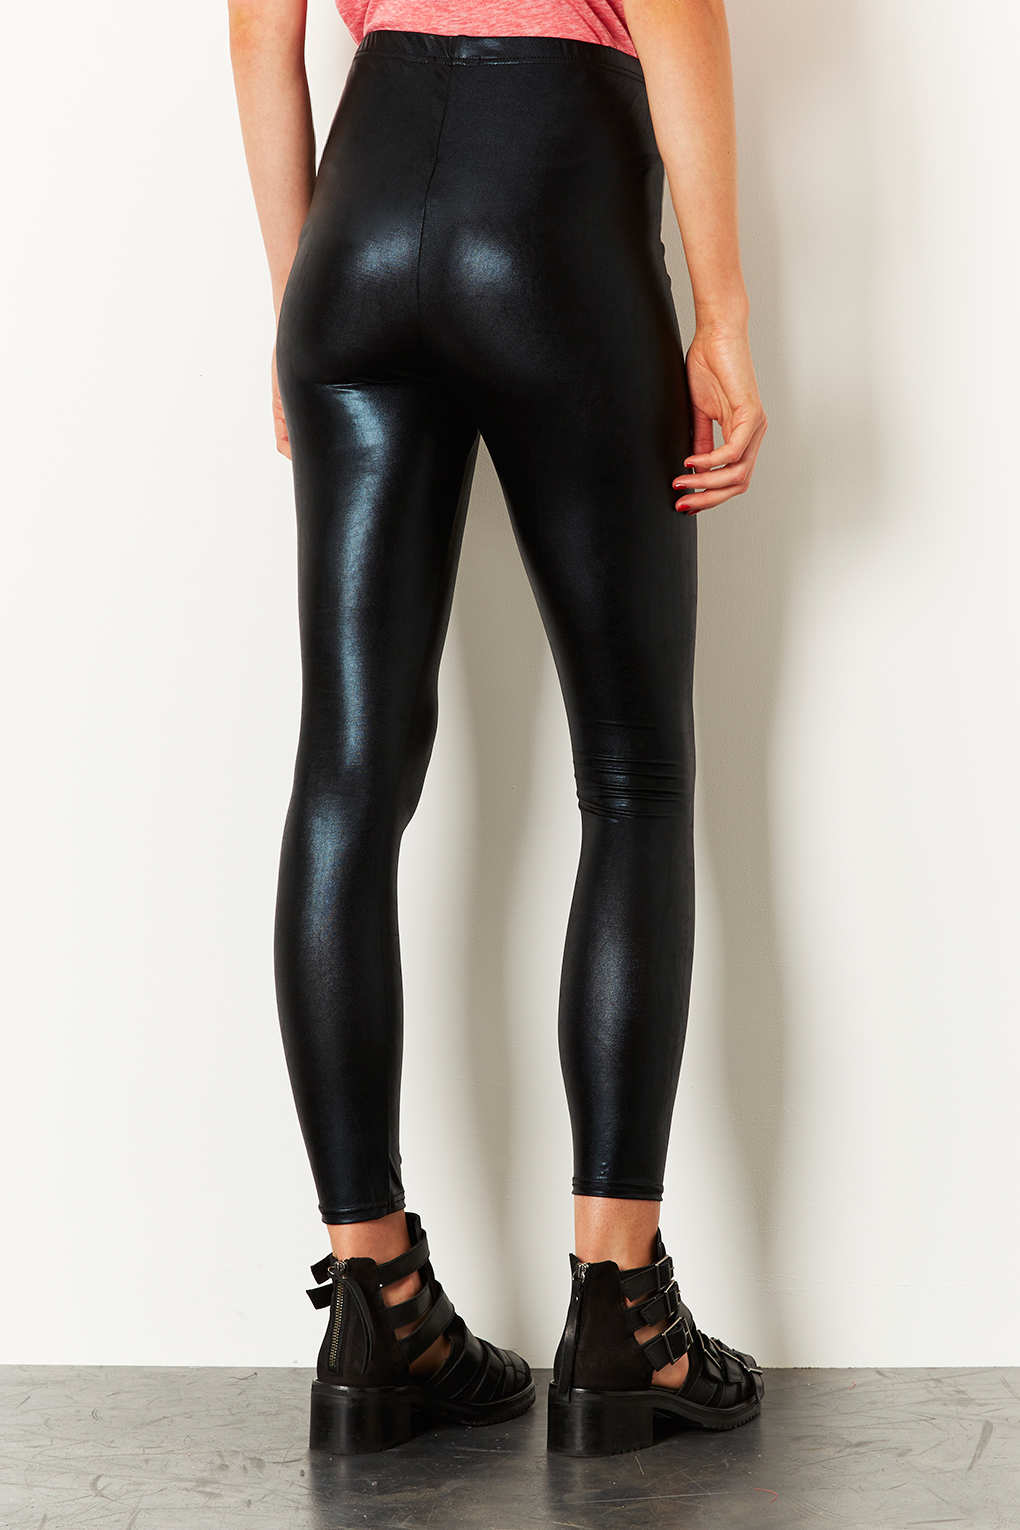 topshop black maternity shiny wetlook leggings product 3 13283282 913048609